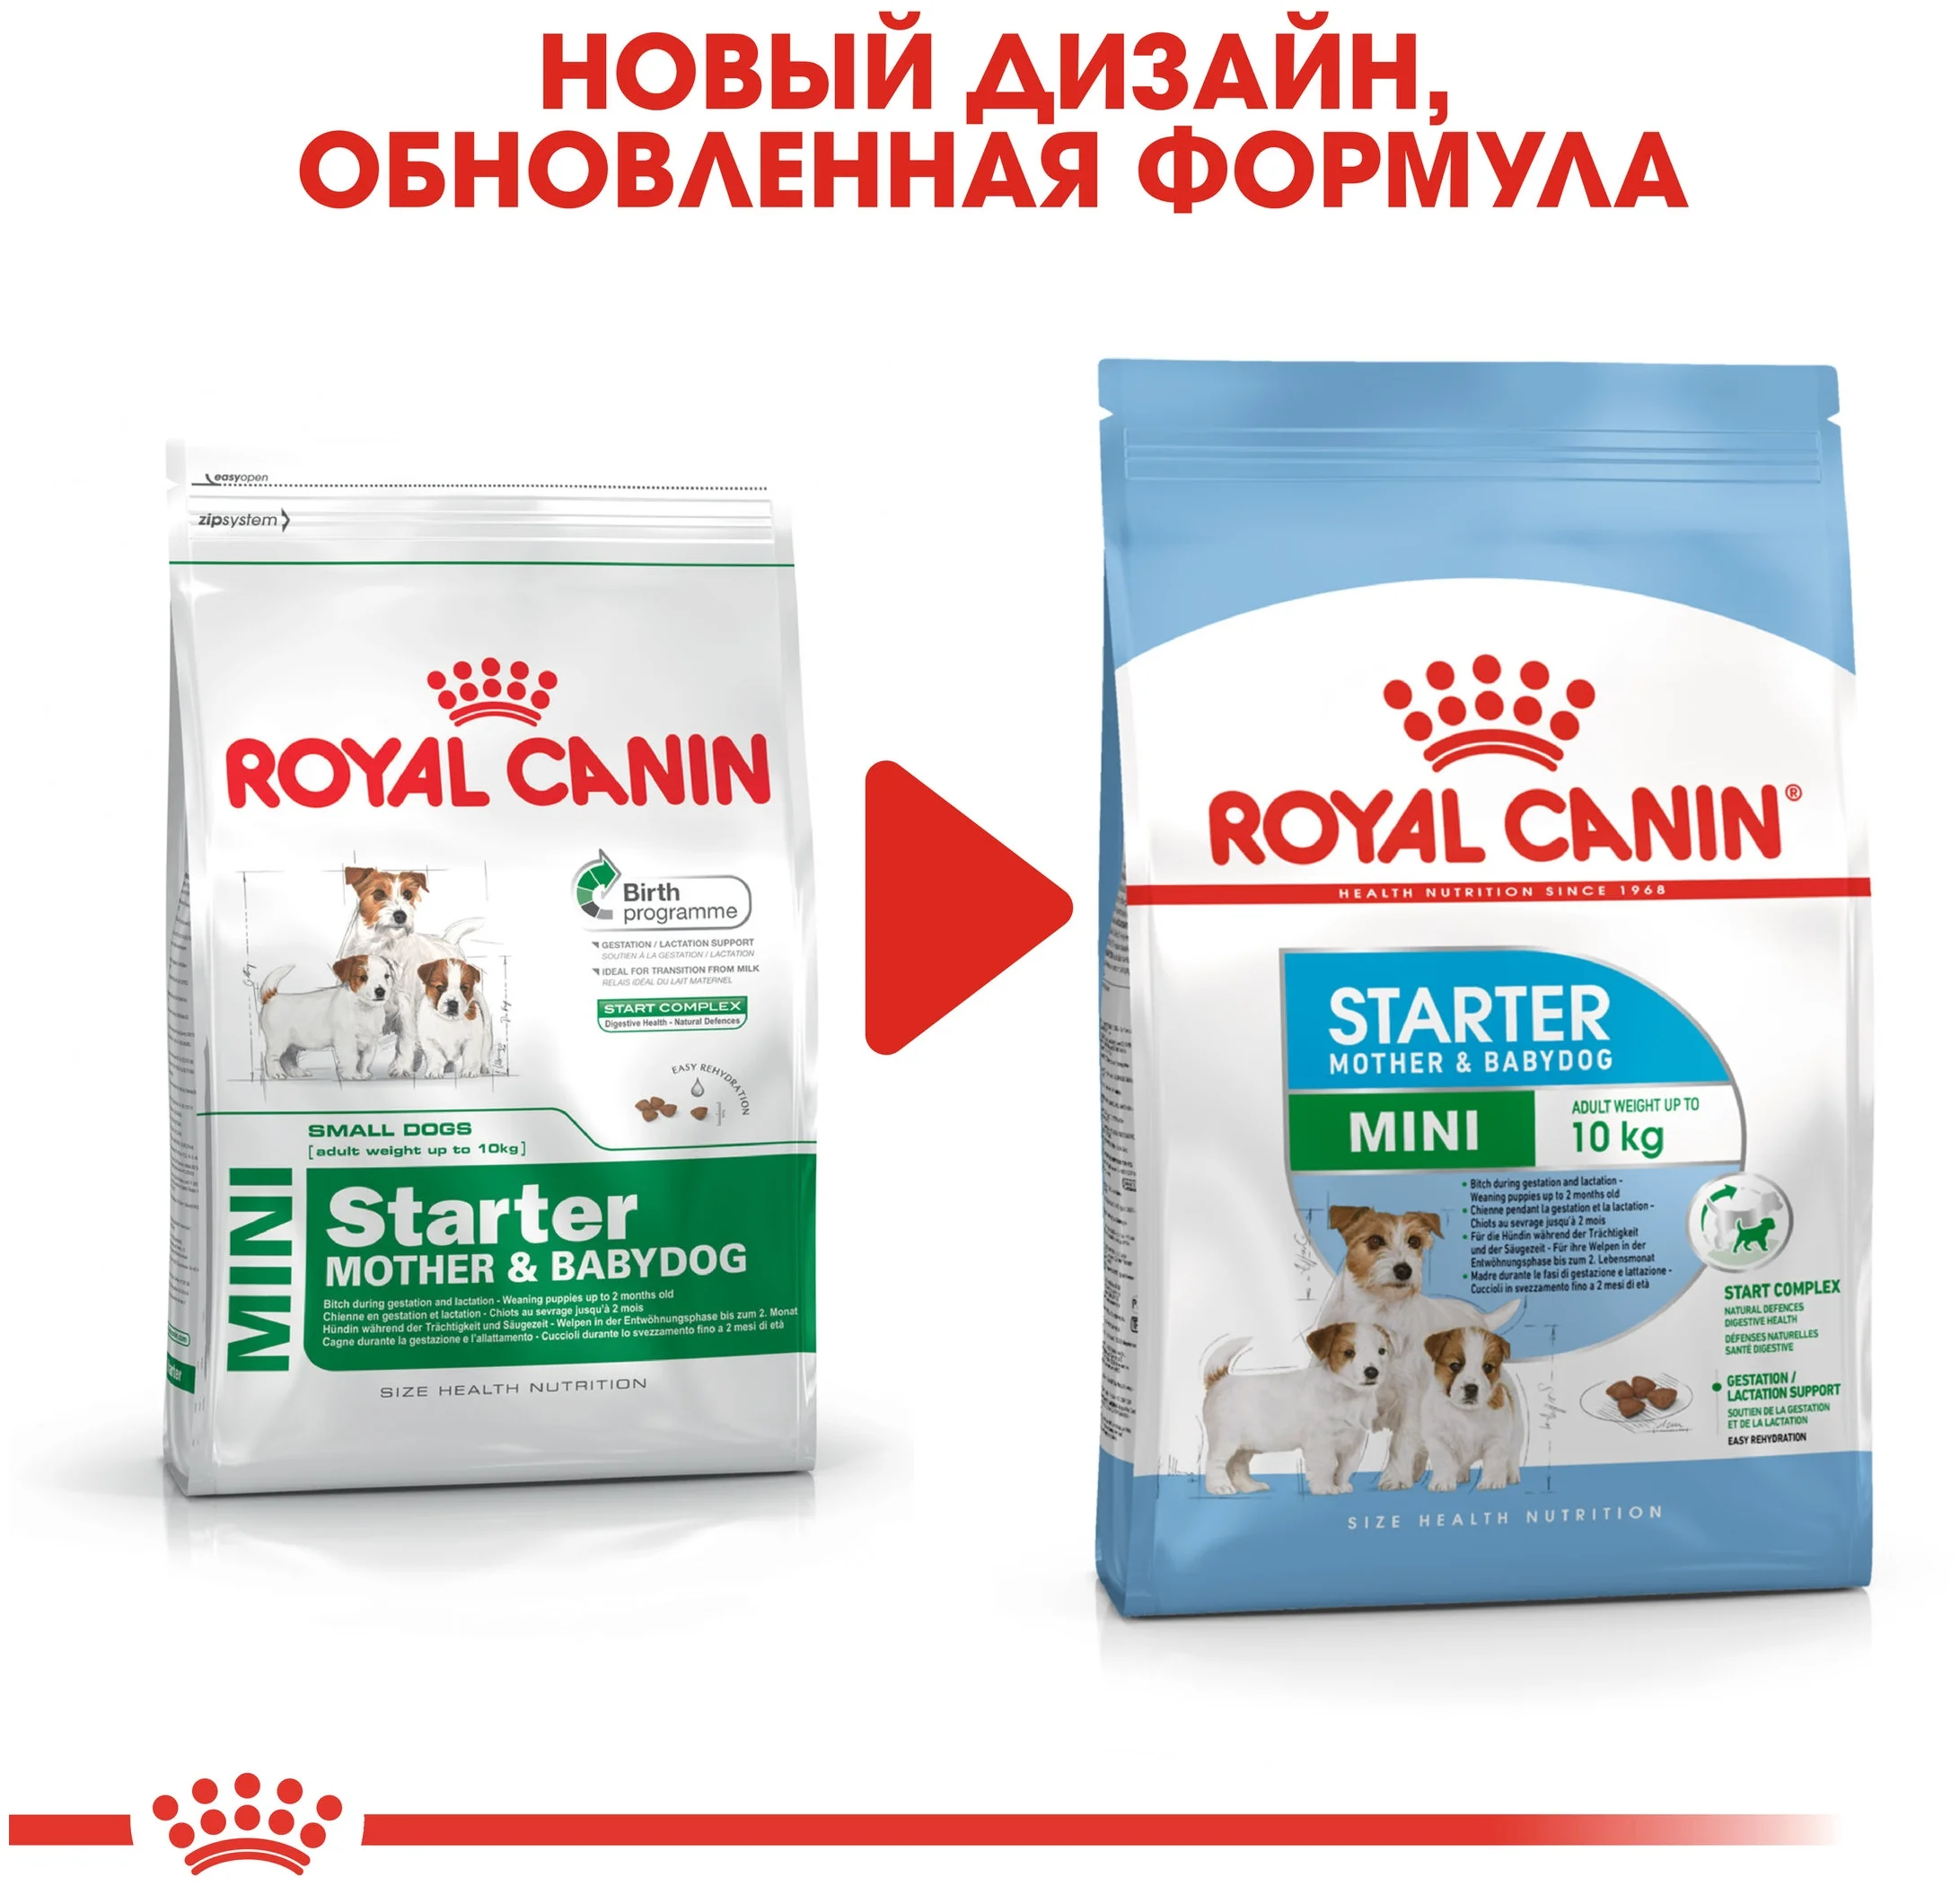 Royal Canin "Mini Starter Mother & Babydog" - класс ингредиентов: премиум